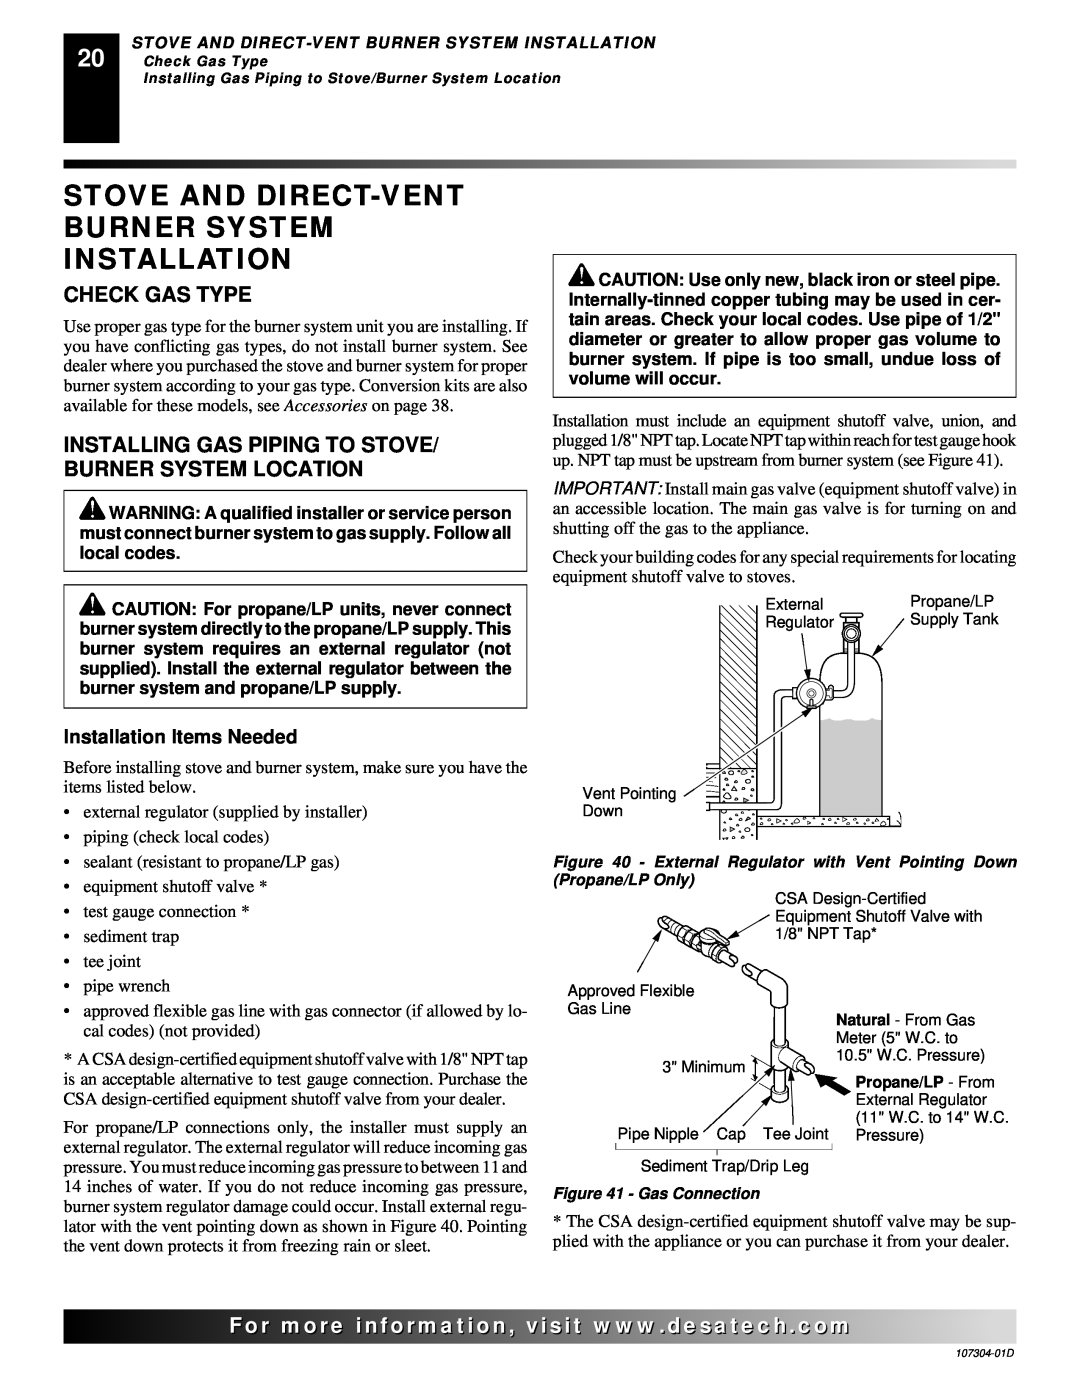 Desa SDVBPC, SDVBNC installation manual Stove And Direct-Ventburner System Installation, Check Gas Type 